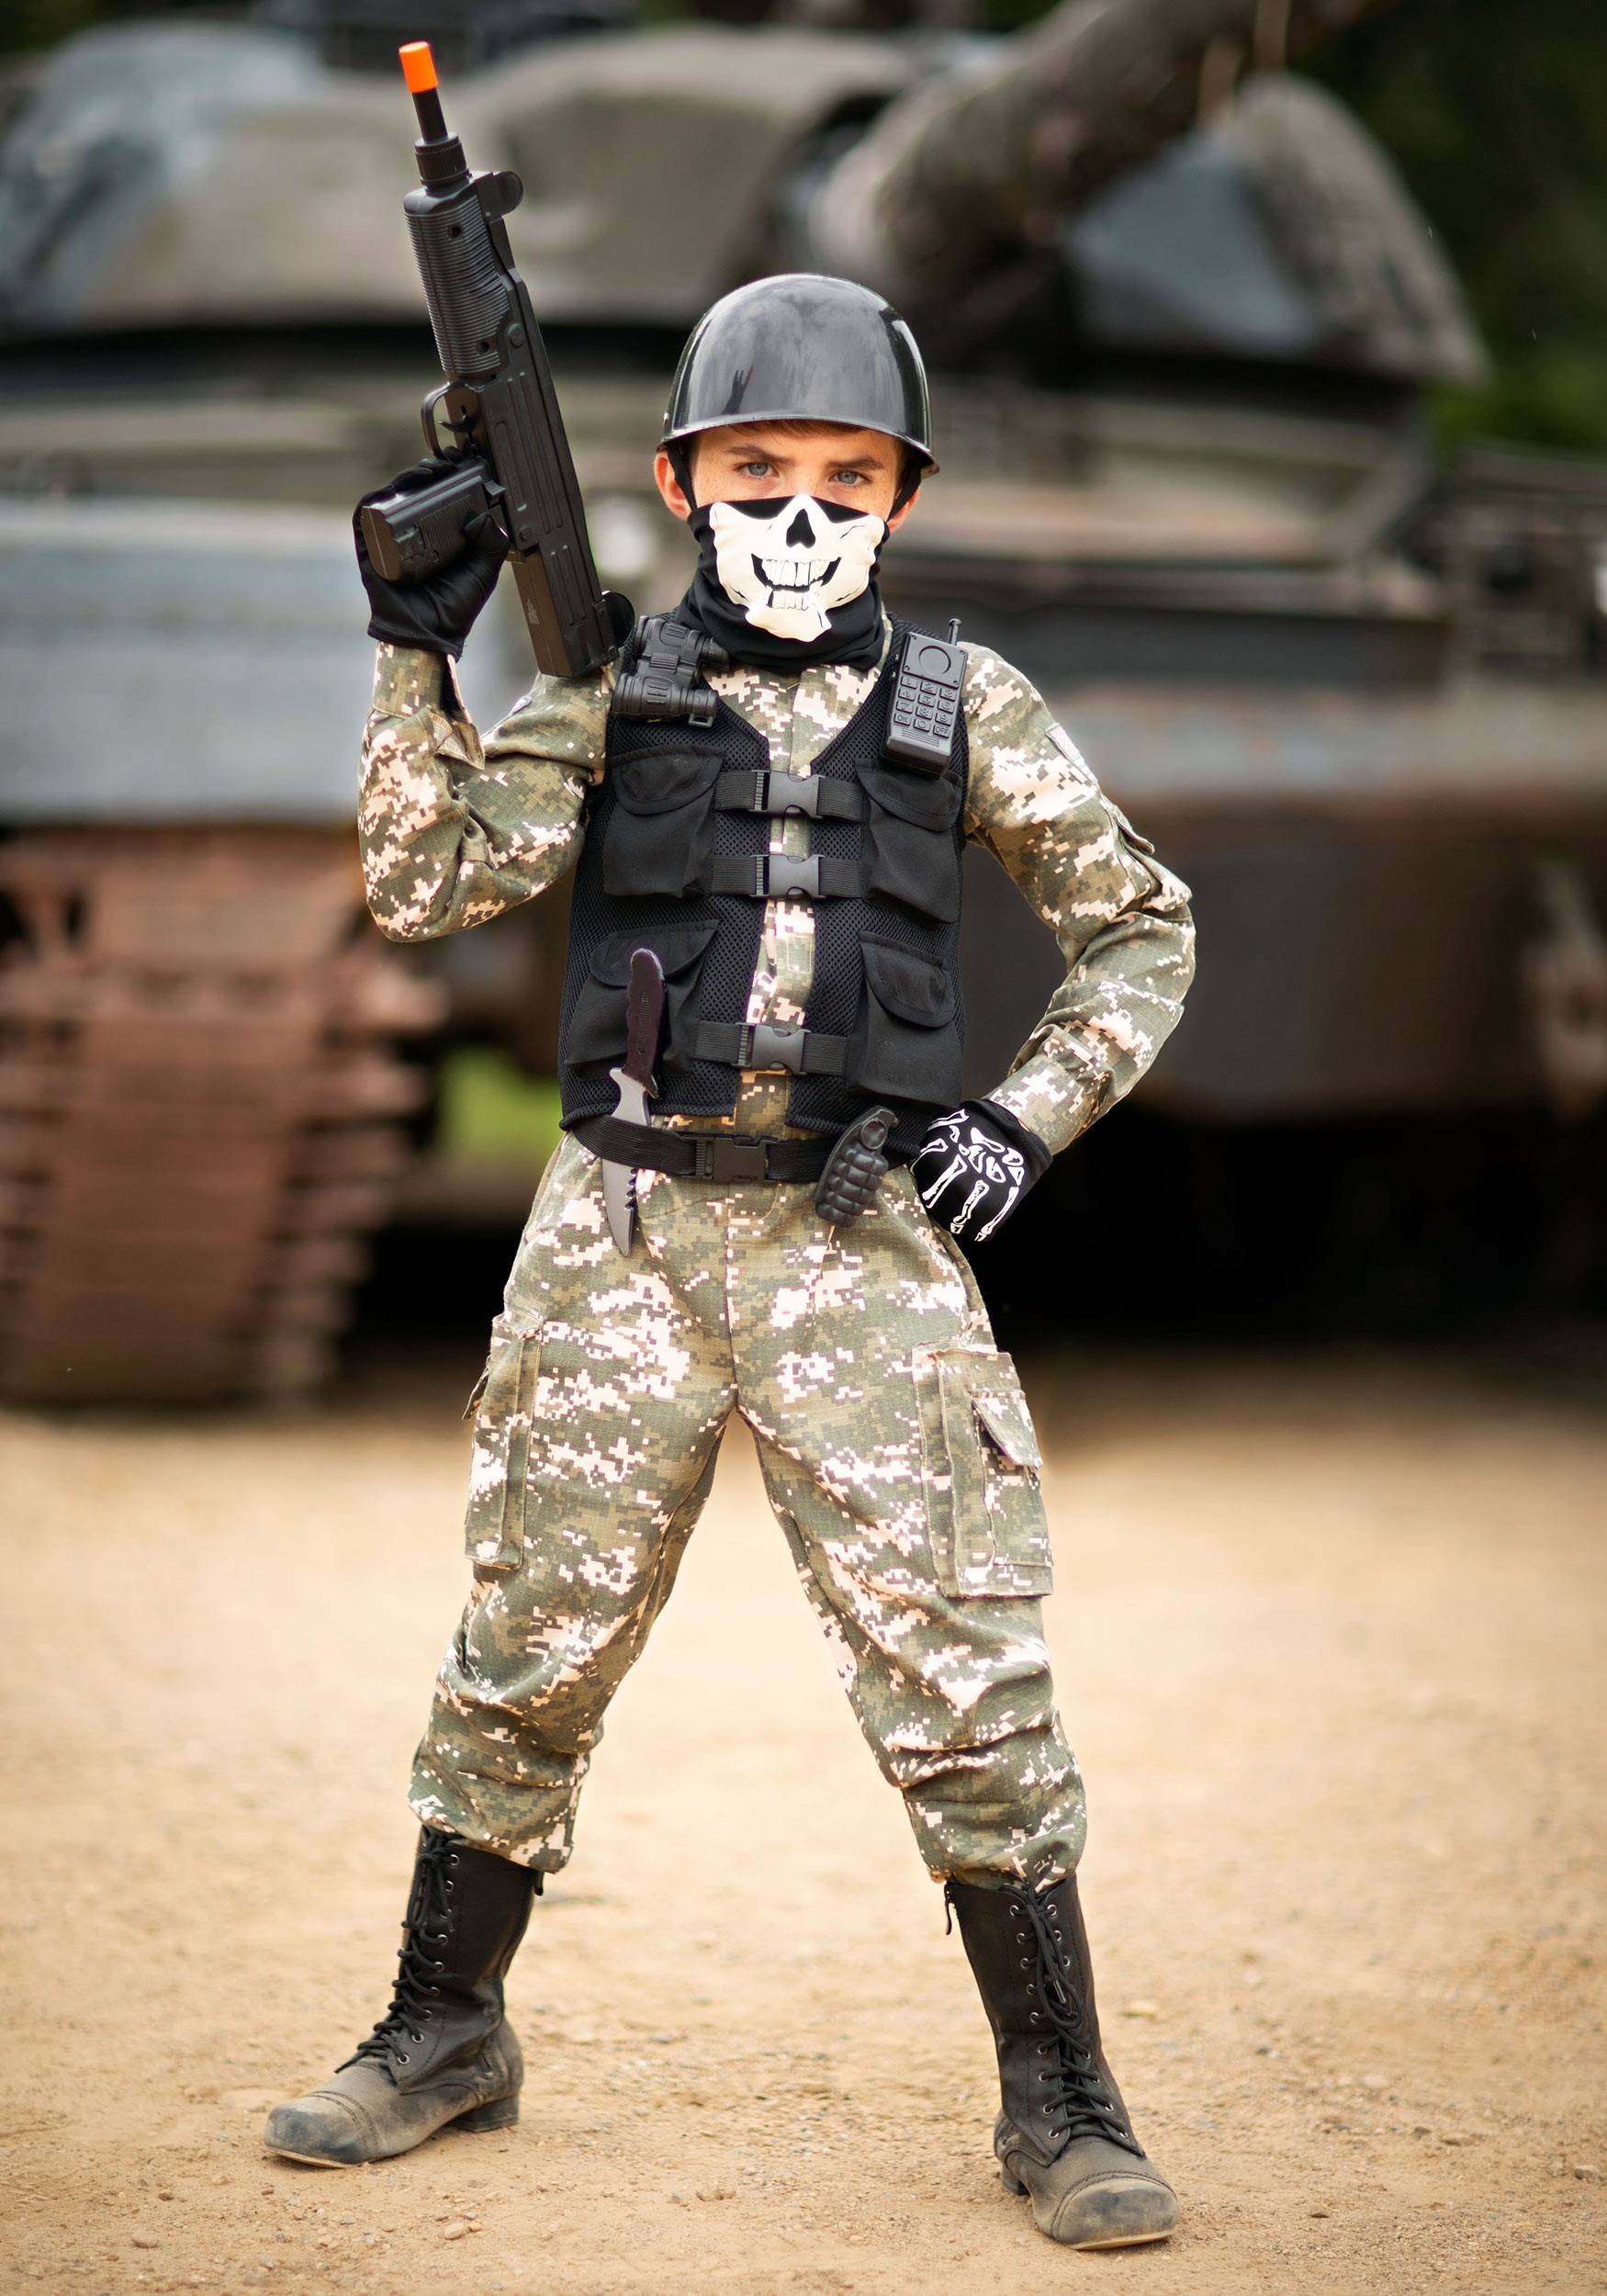 Military costume